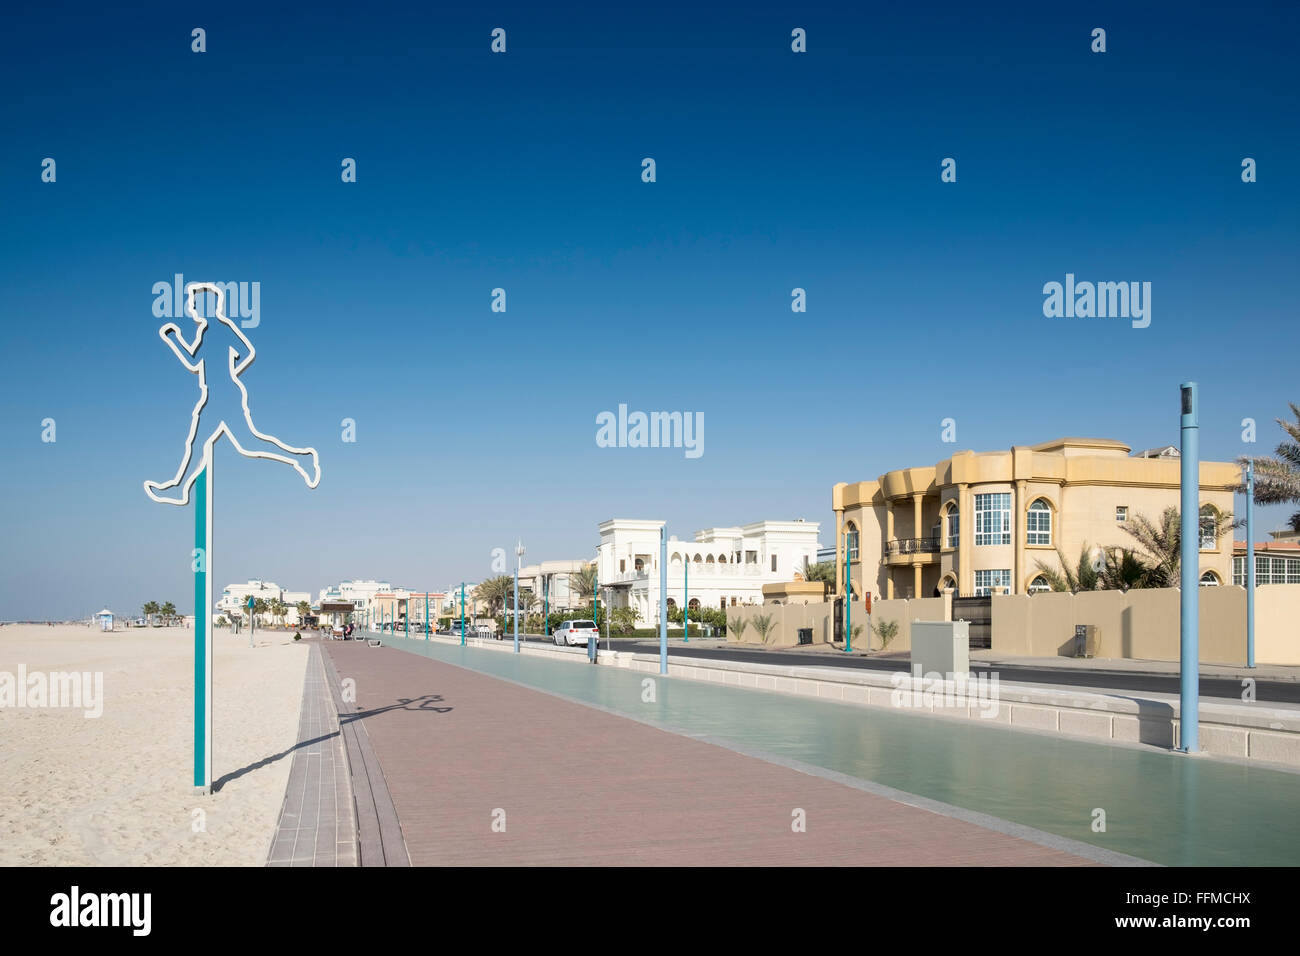 New public boardwalk and jogging track beside beach  in Dubai United Arab Emirates Stock Photo